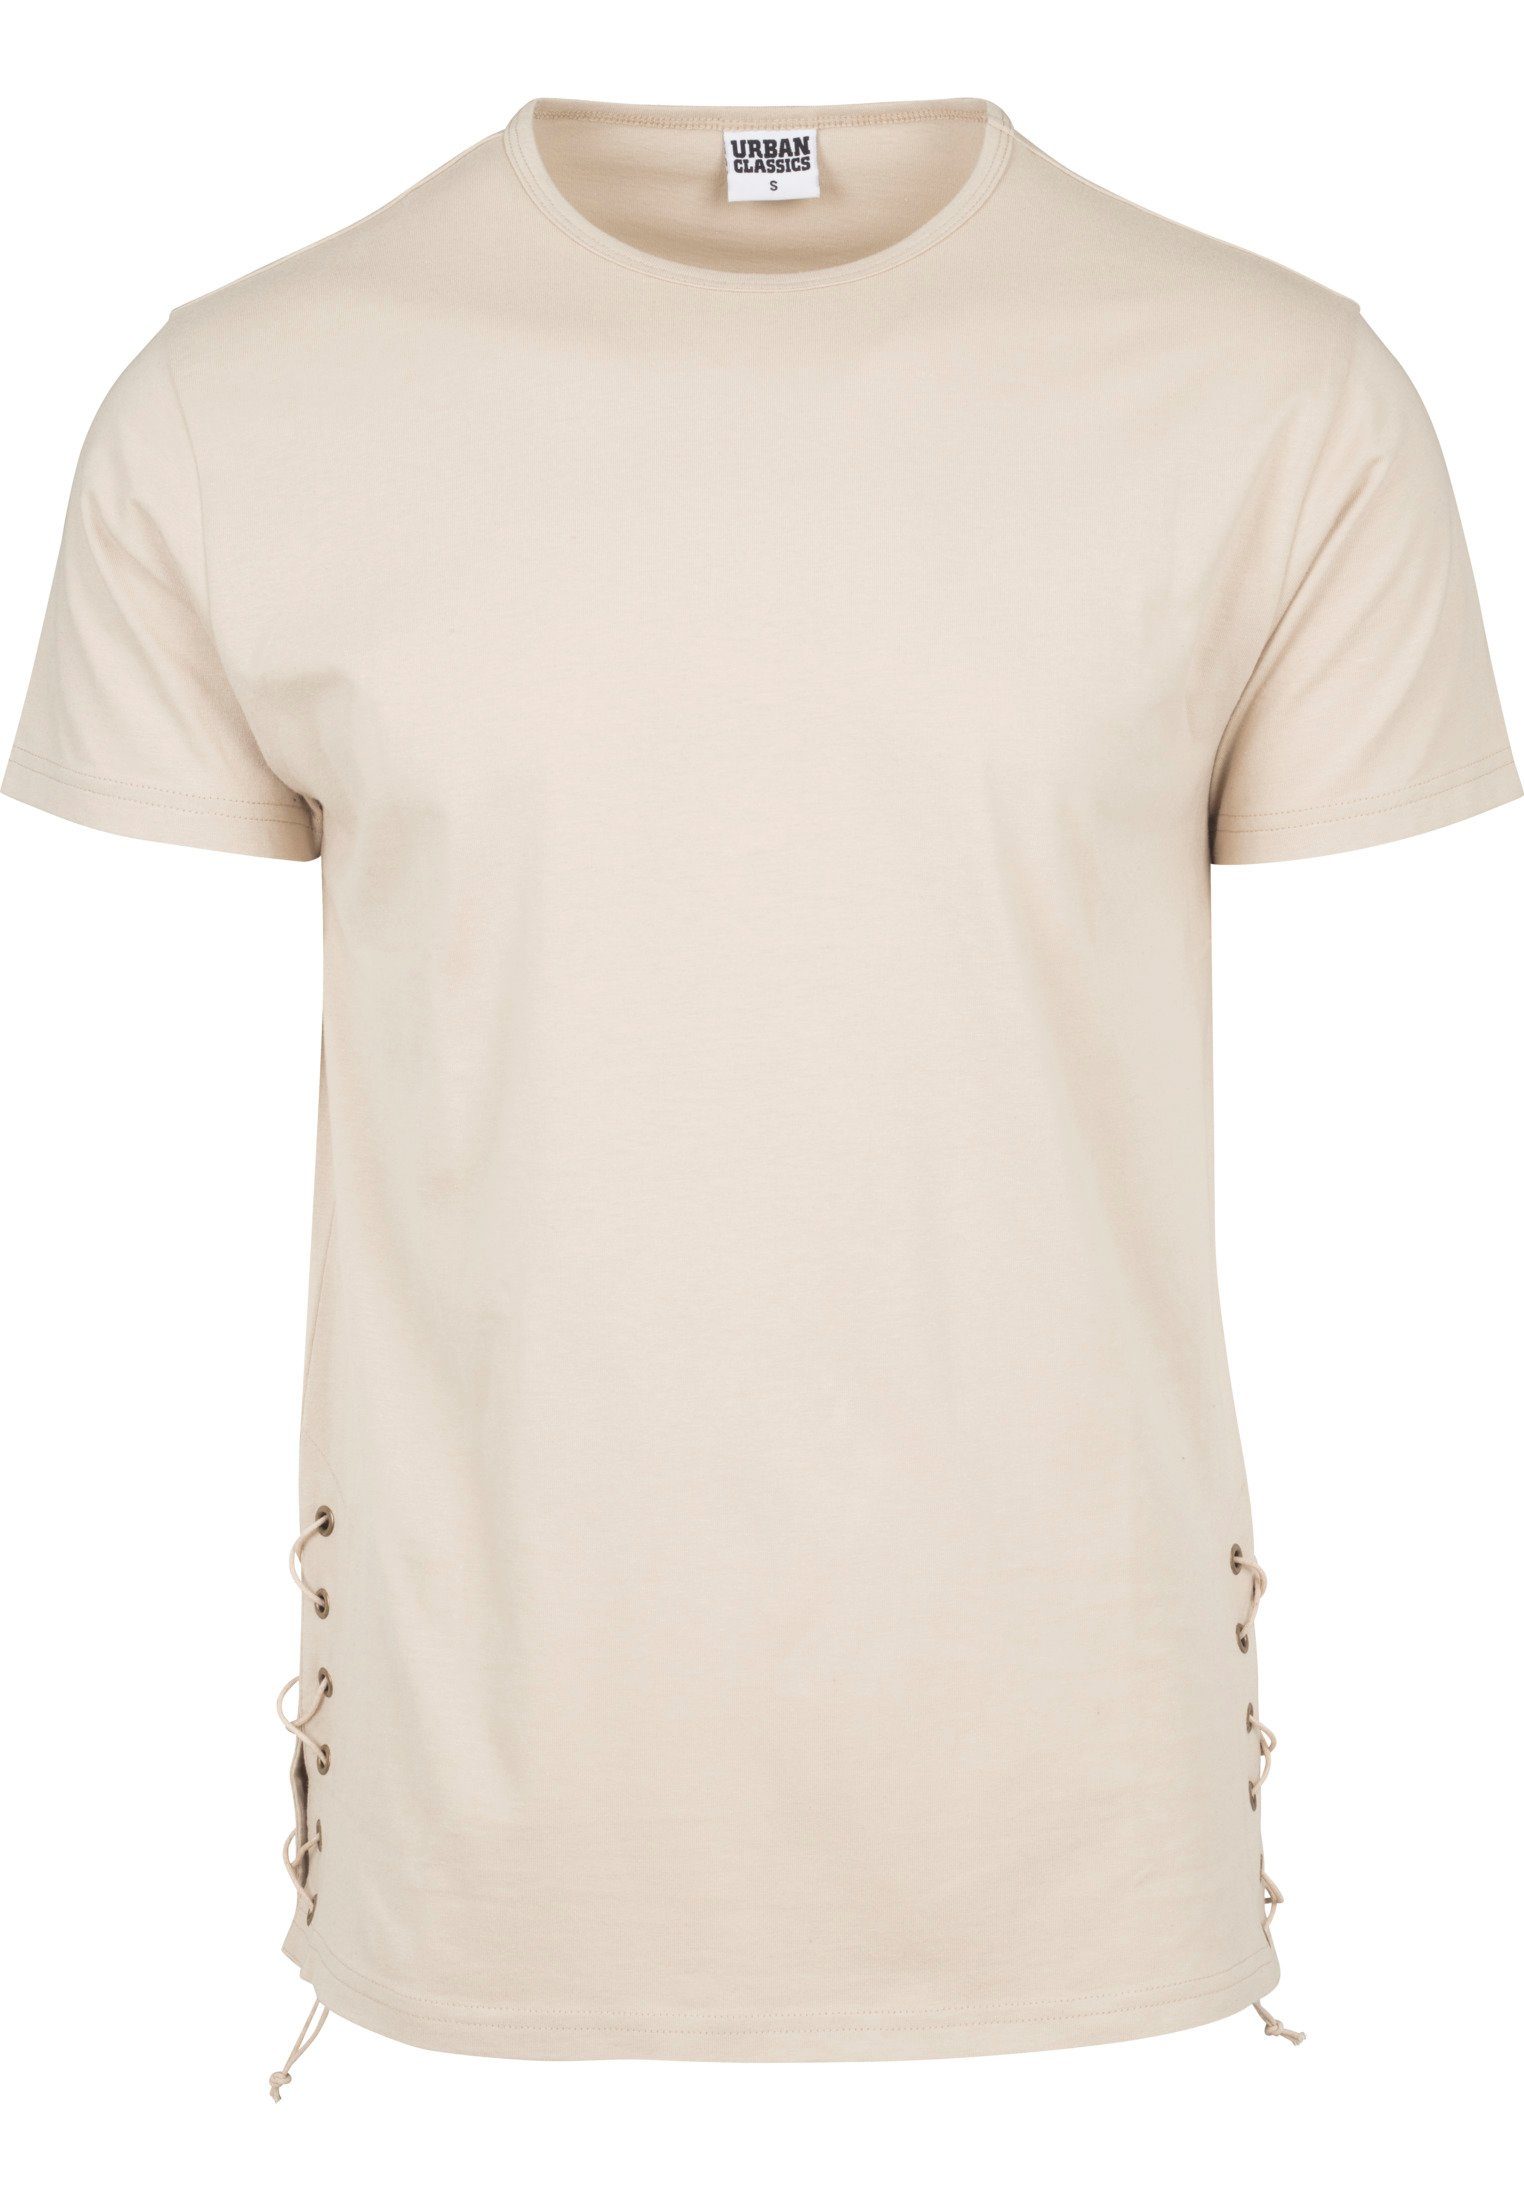 URBAN CLASSICS T-Shirt sand Long TB1777 Lace Up